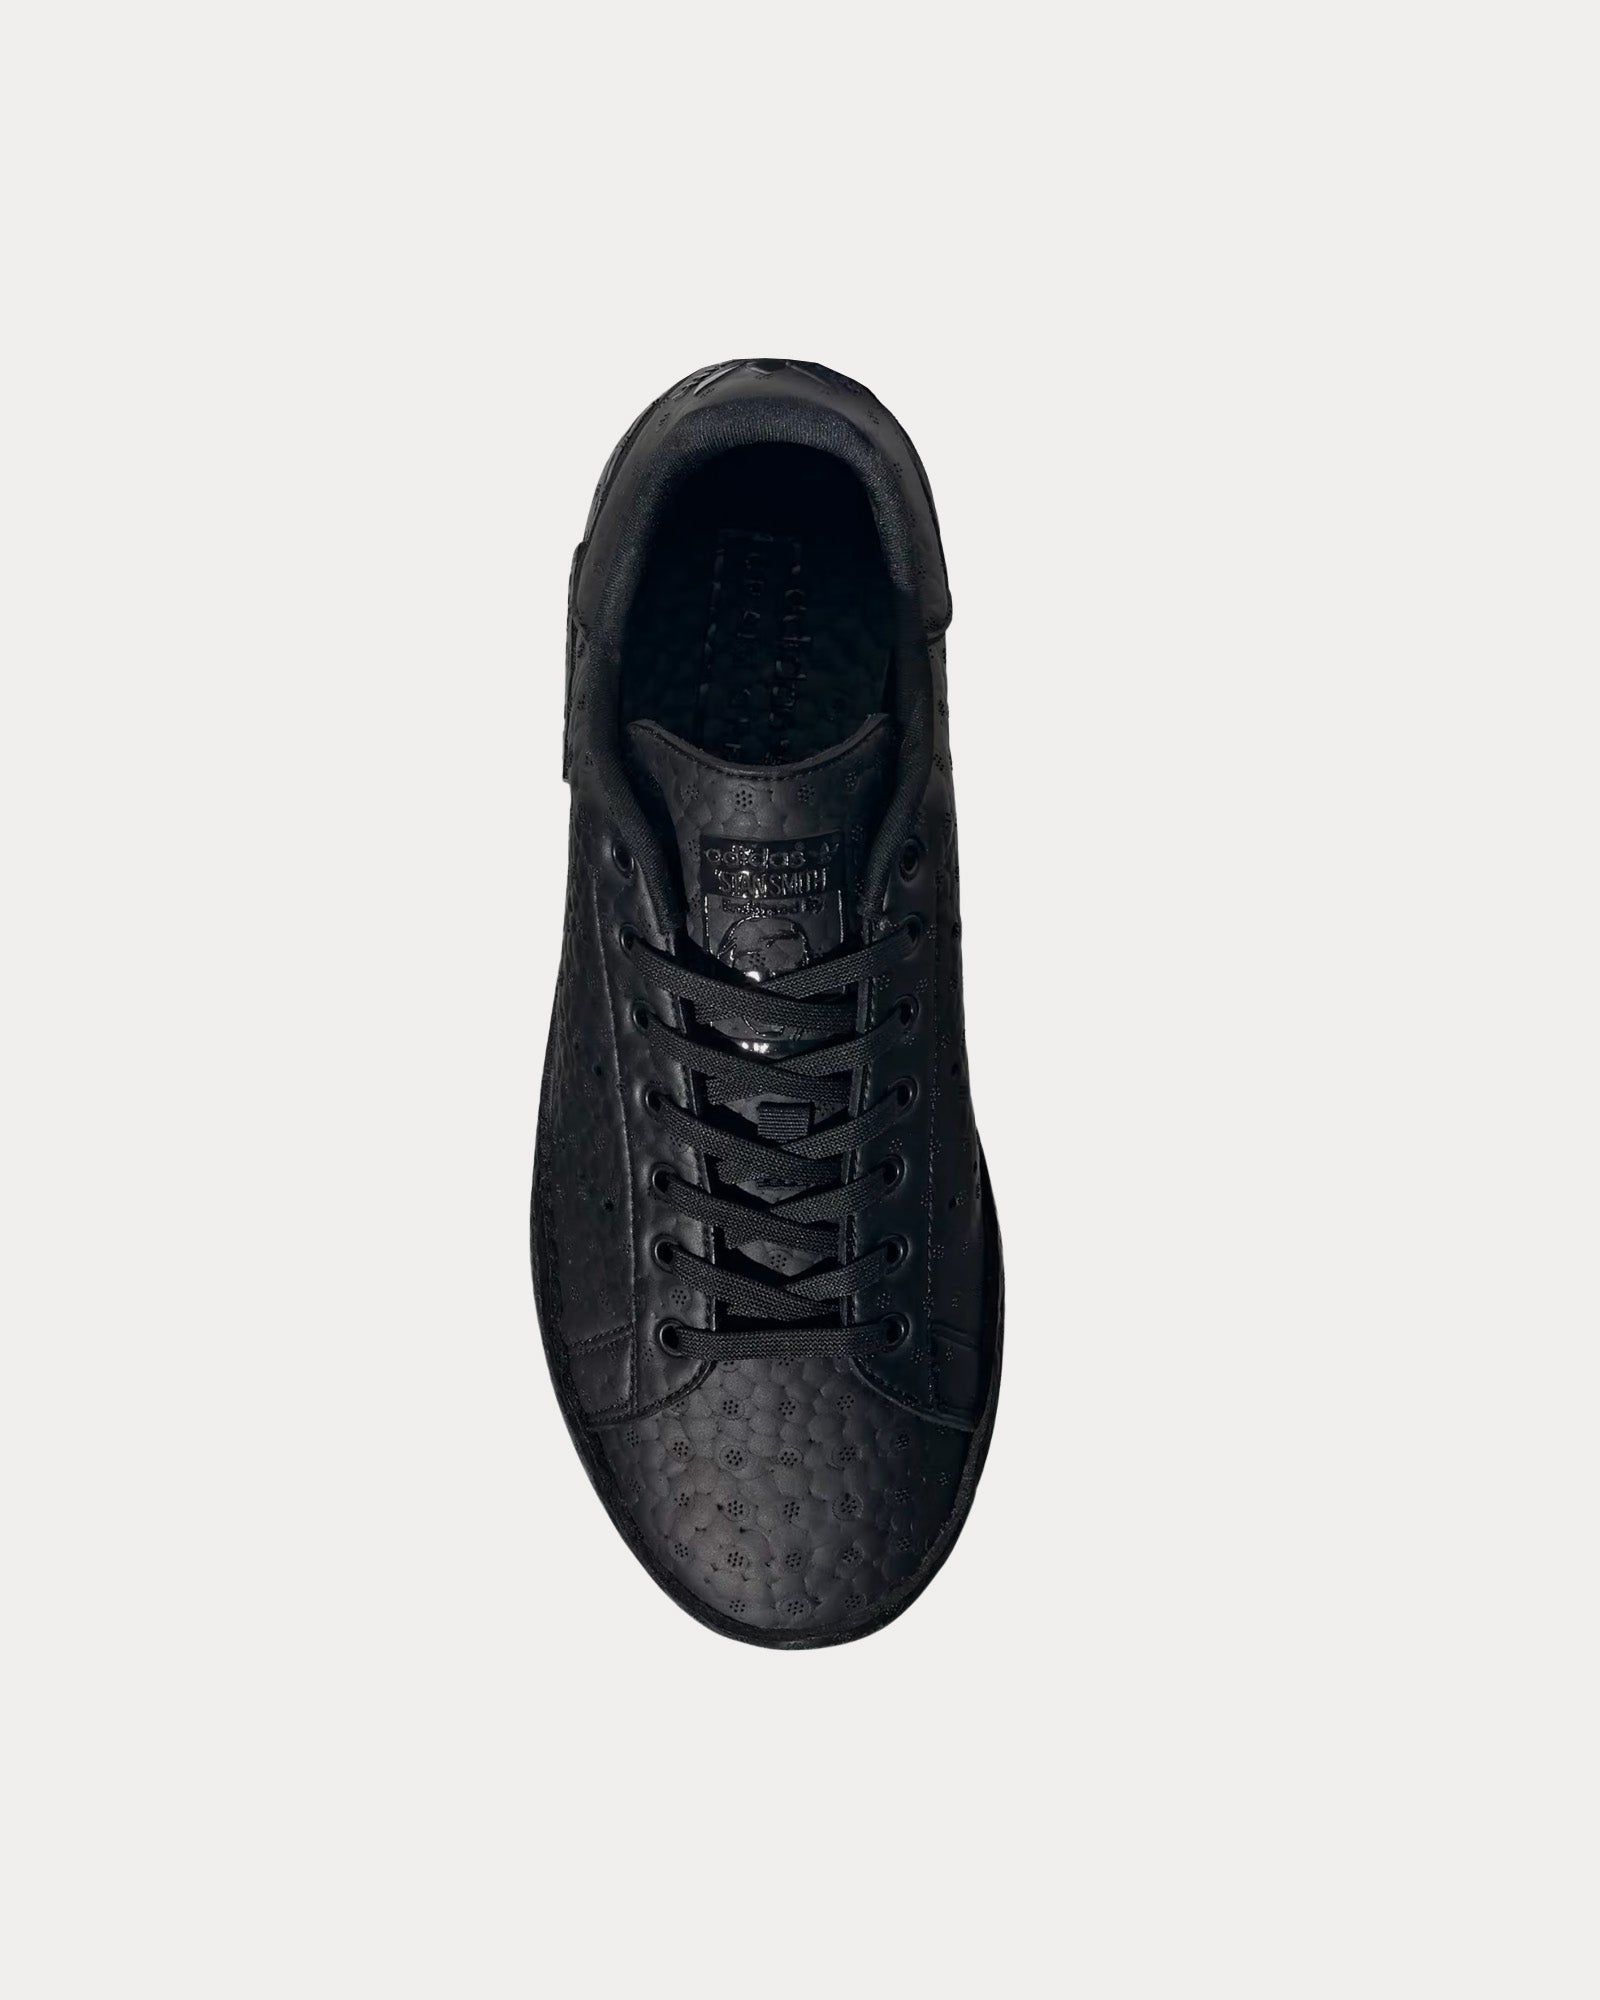 Adidas x Craig Green - Stan Smith Boost Core Black / Core Black / Core Black Low Top Sneakers